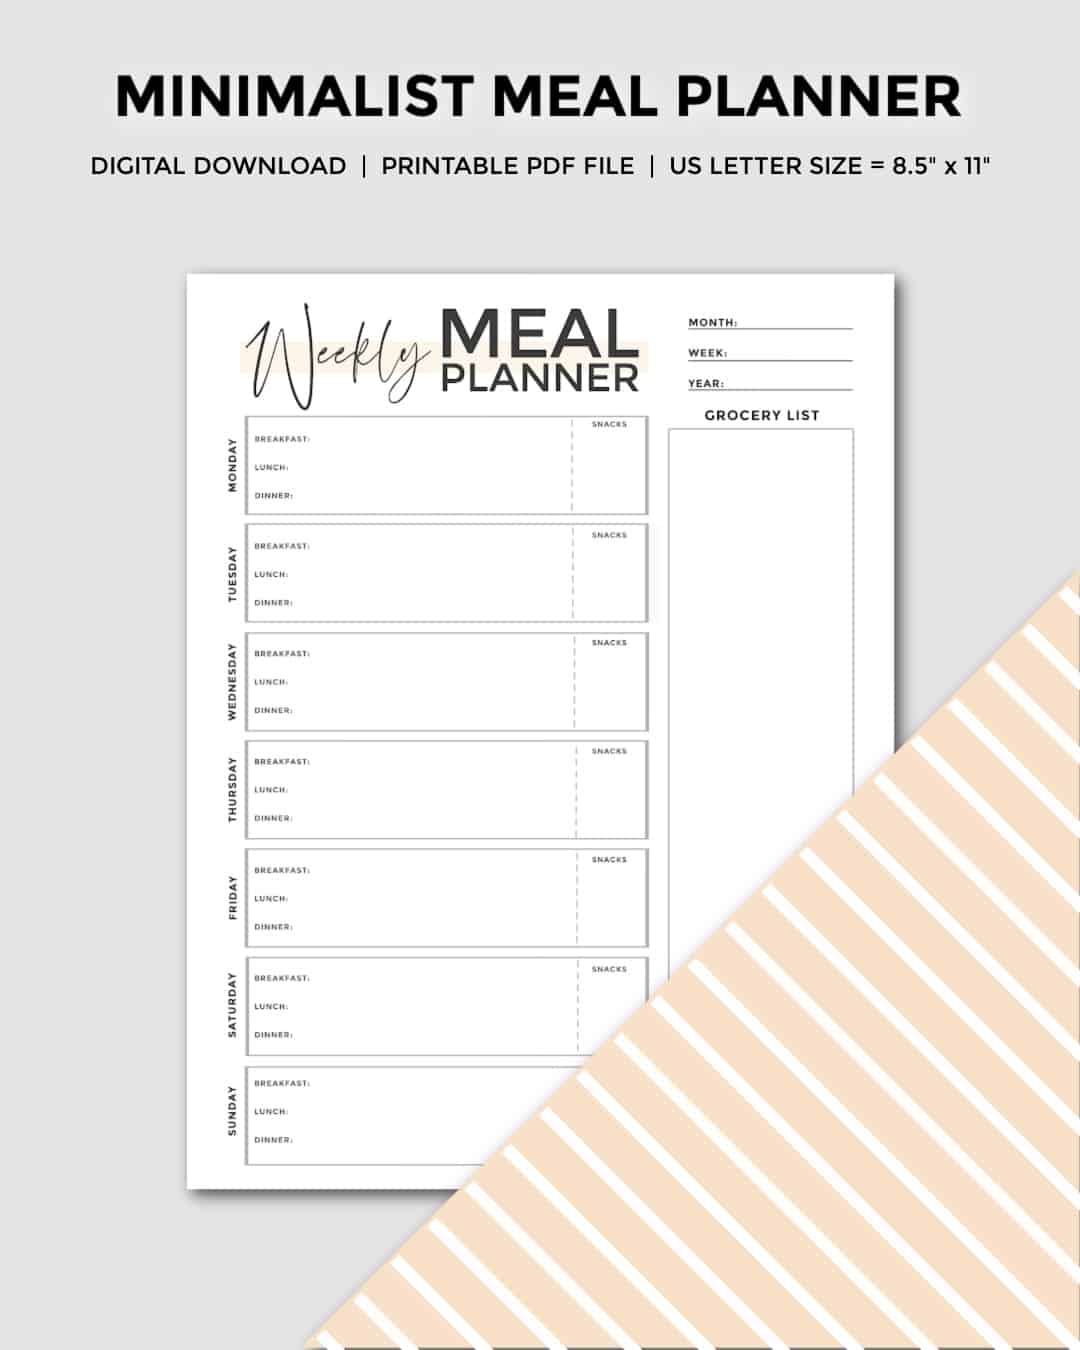 A weekly minimalist meal planner printable